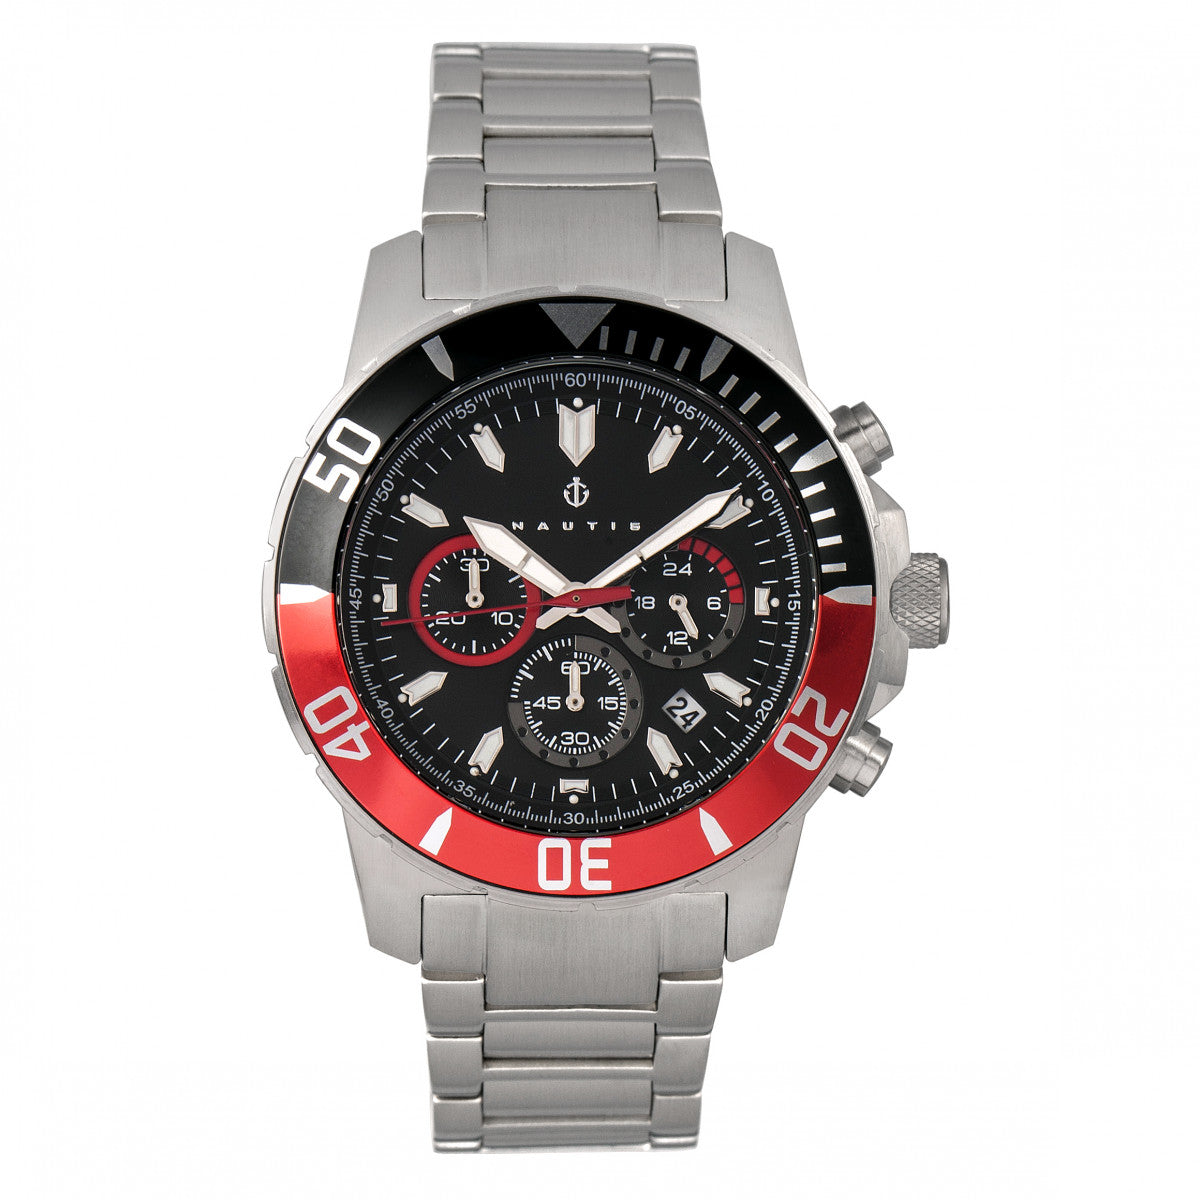 Nautis Dive Chrono 500 Chronograph Bracelet Watch - Black/Red - 17065-J